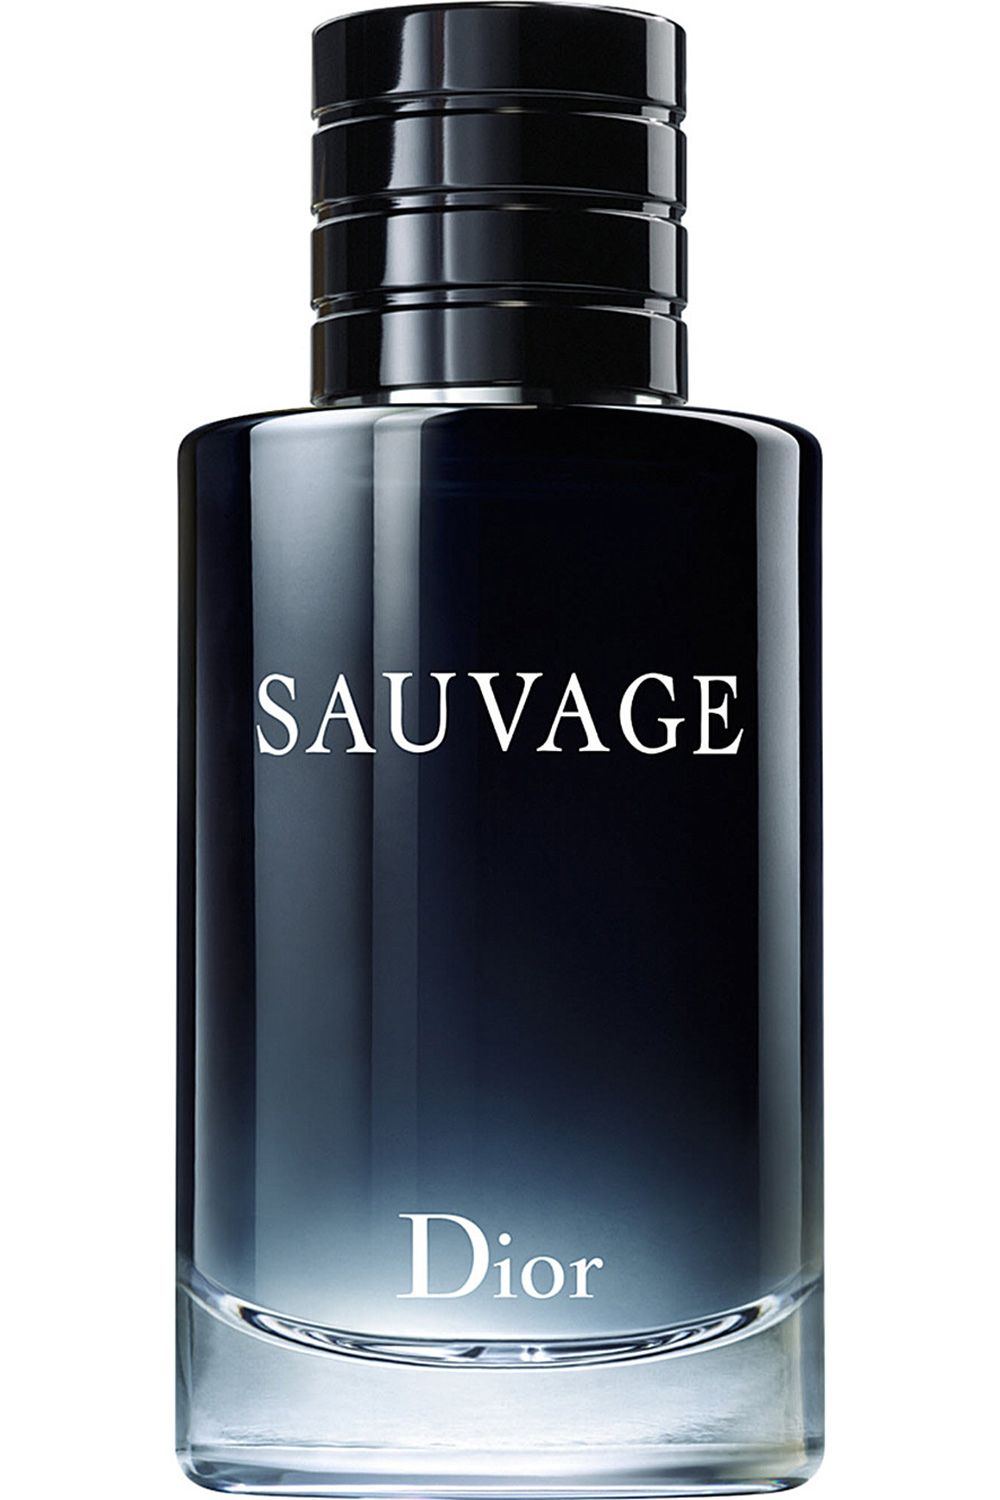 most popular dior perfume